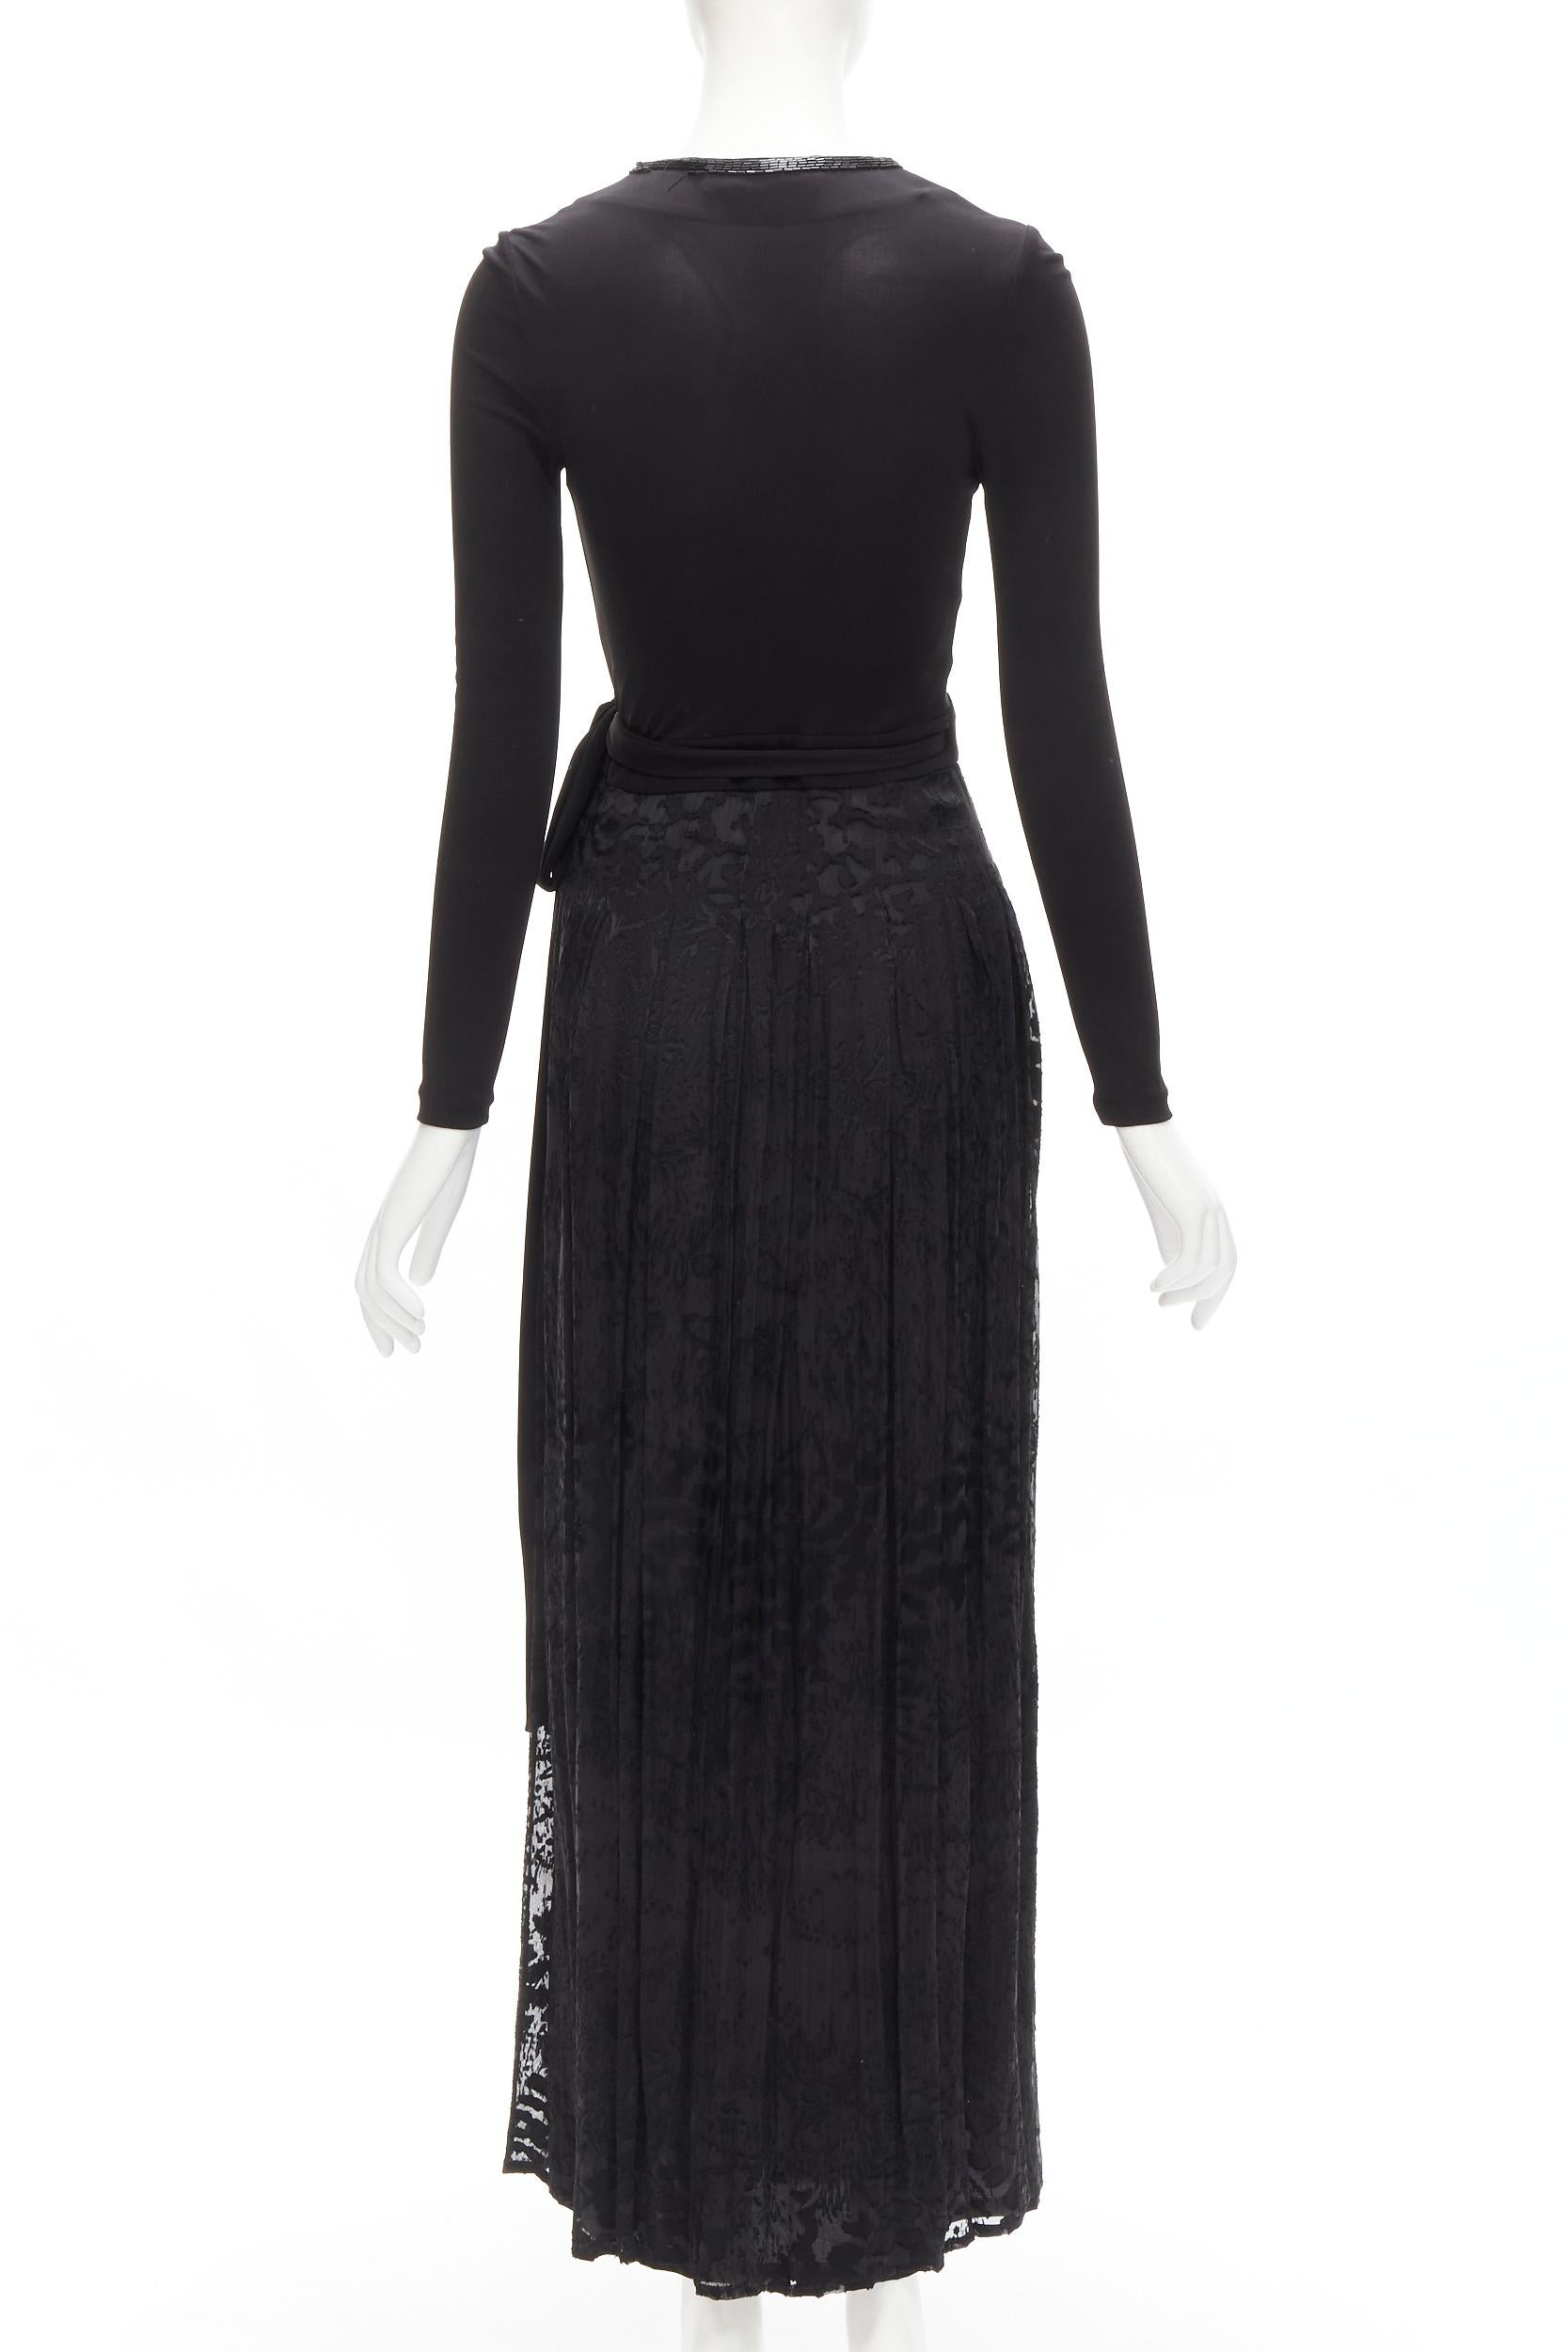 Black DIANE VON FURSTENBERG black silk bead embellished wrap maxi dress US0 XS For Sale